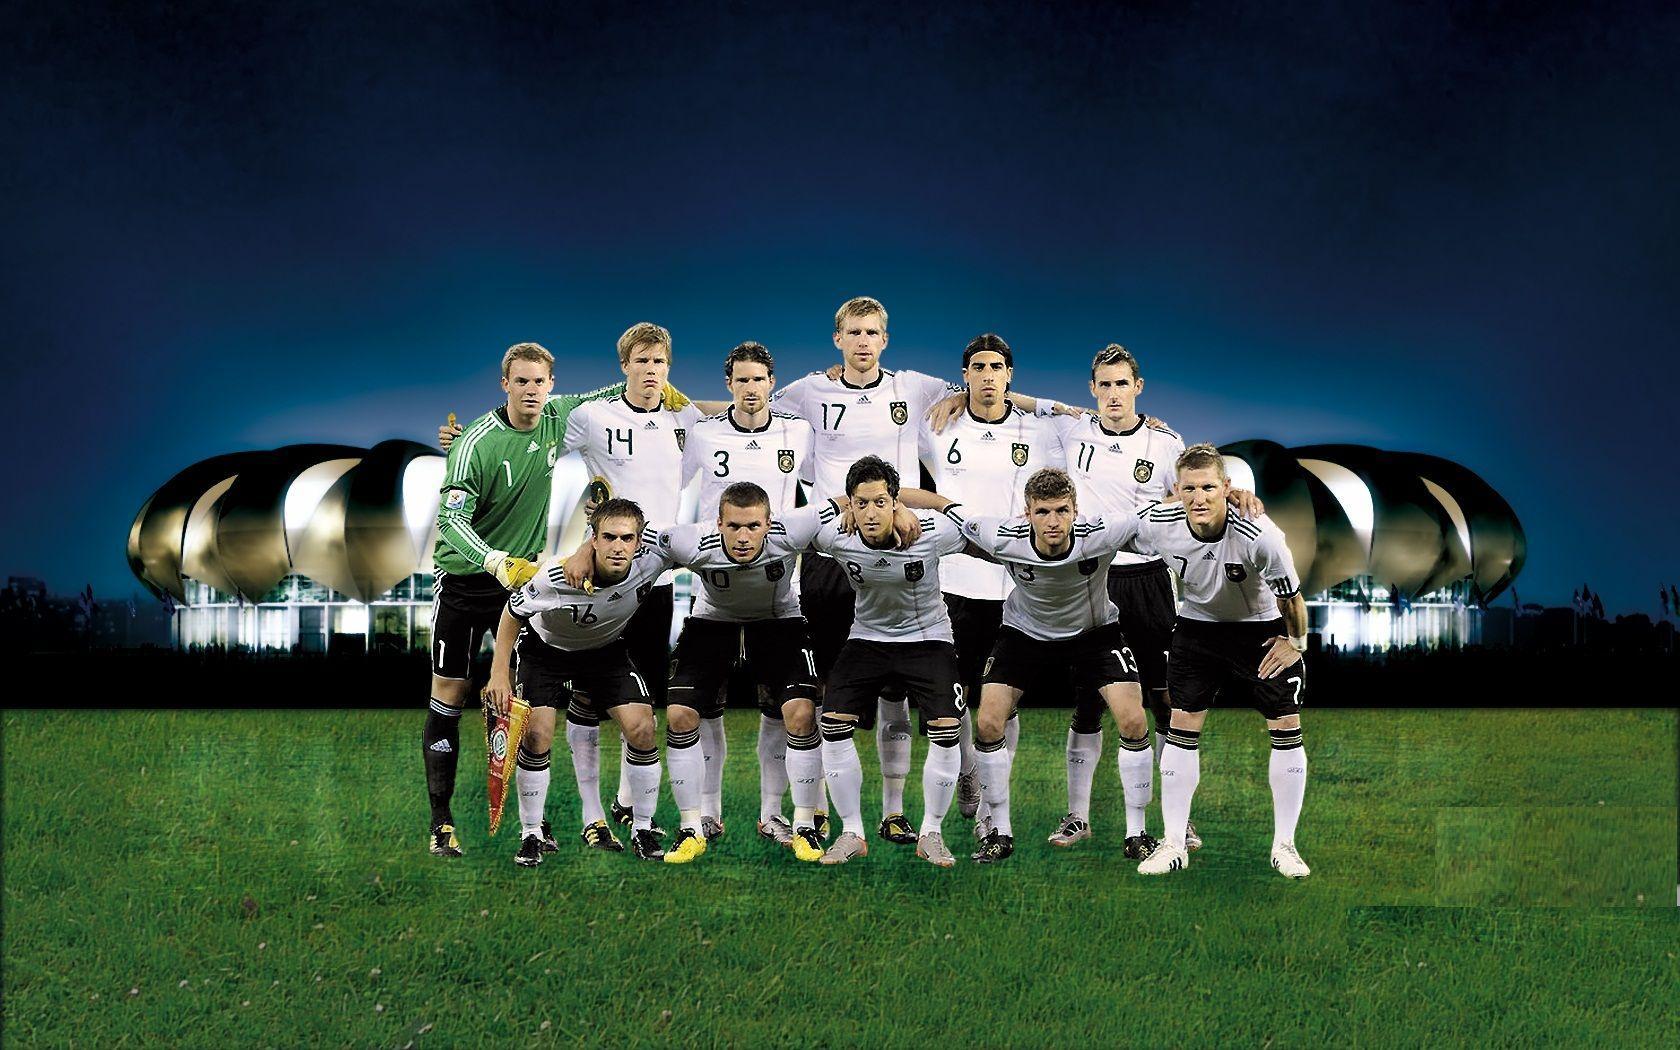 Germany National Football Team Wallpapers Wallpaper Cave Afalchi Free images wallpape [afalchi.blogspot.com]